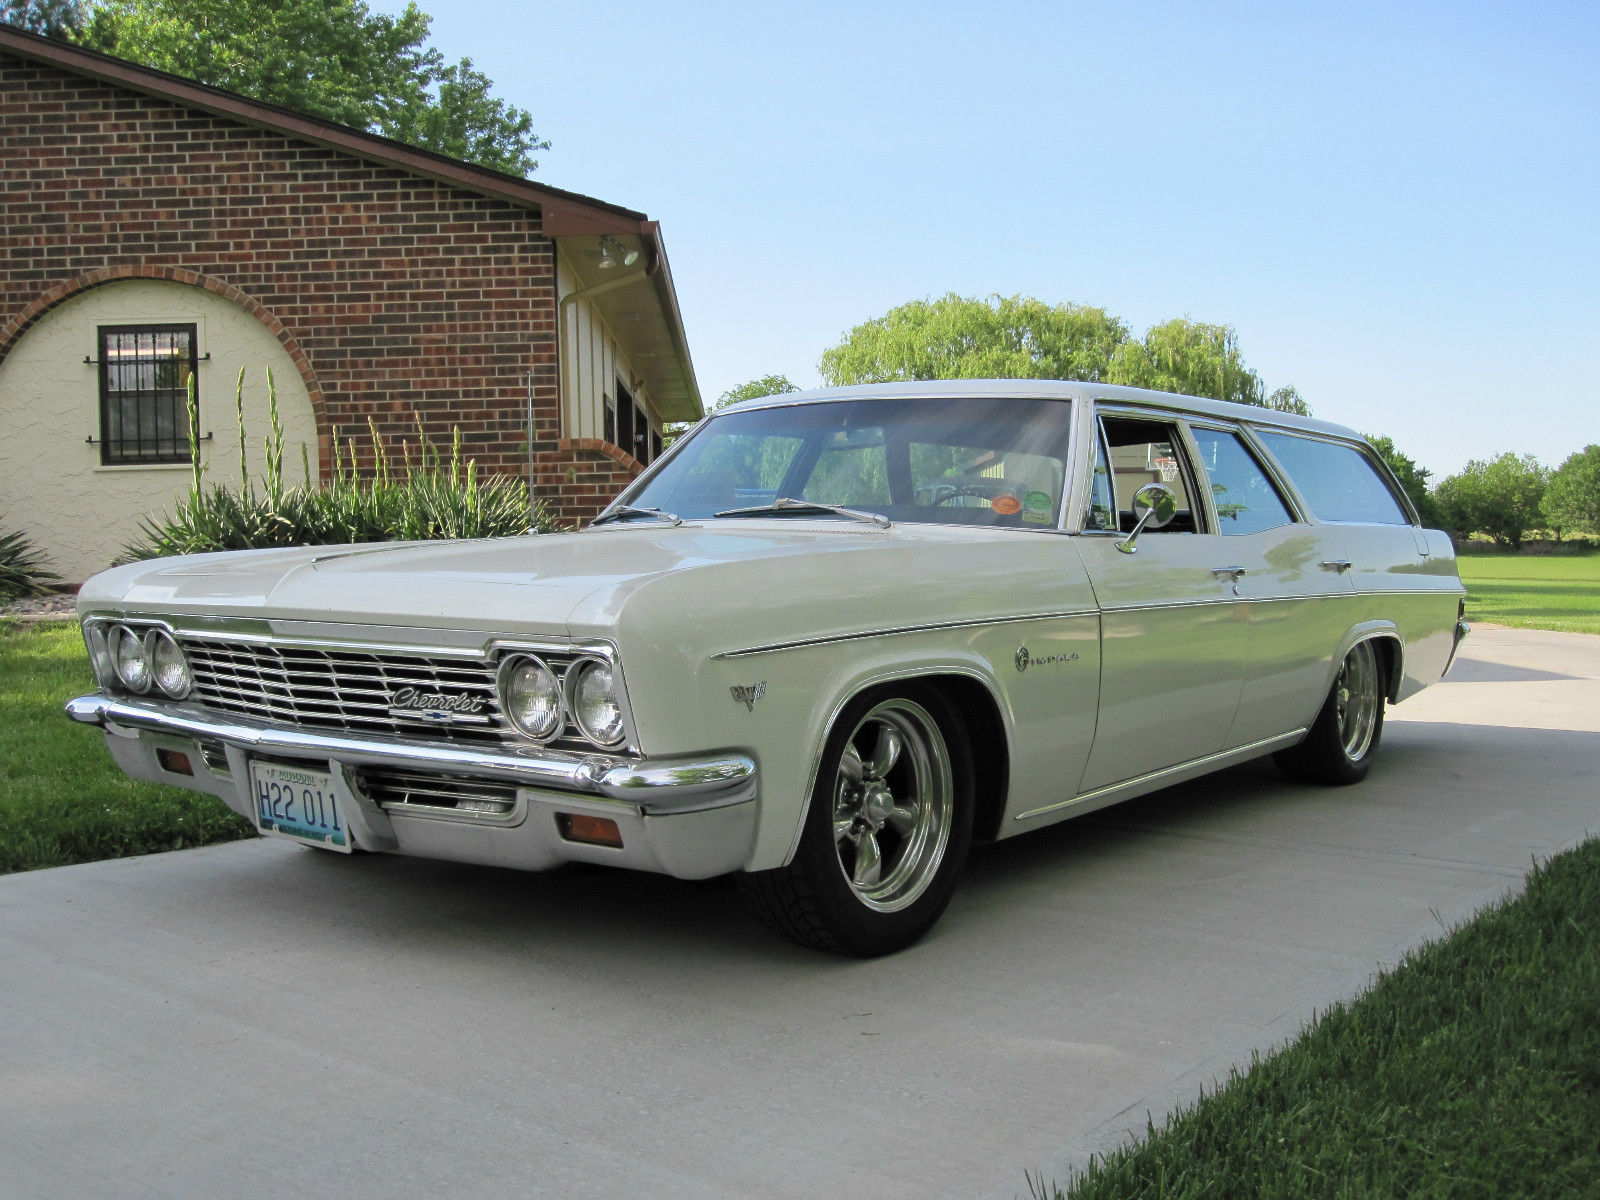 1966 Chevrolet Impala for sale in Belton, Missouri, United States.